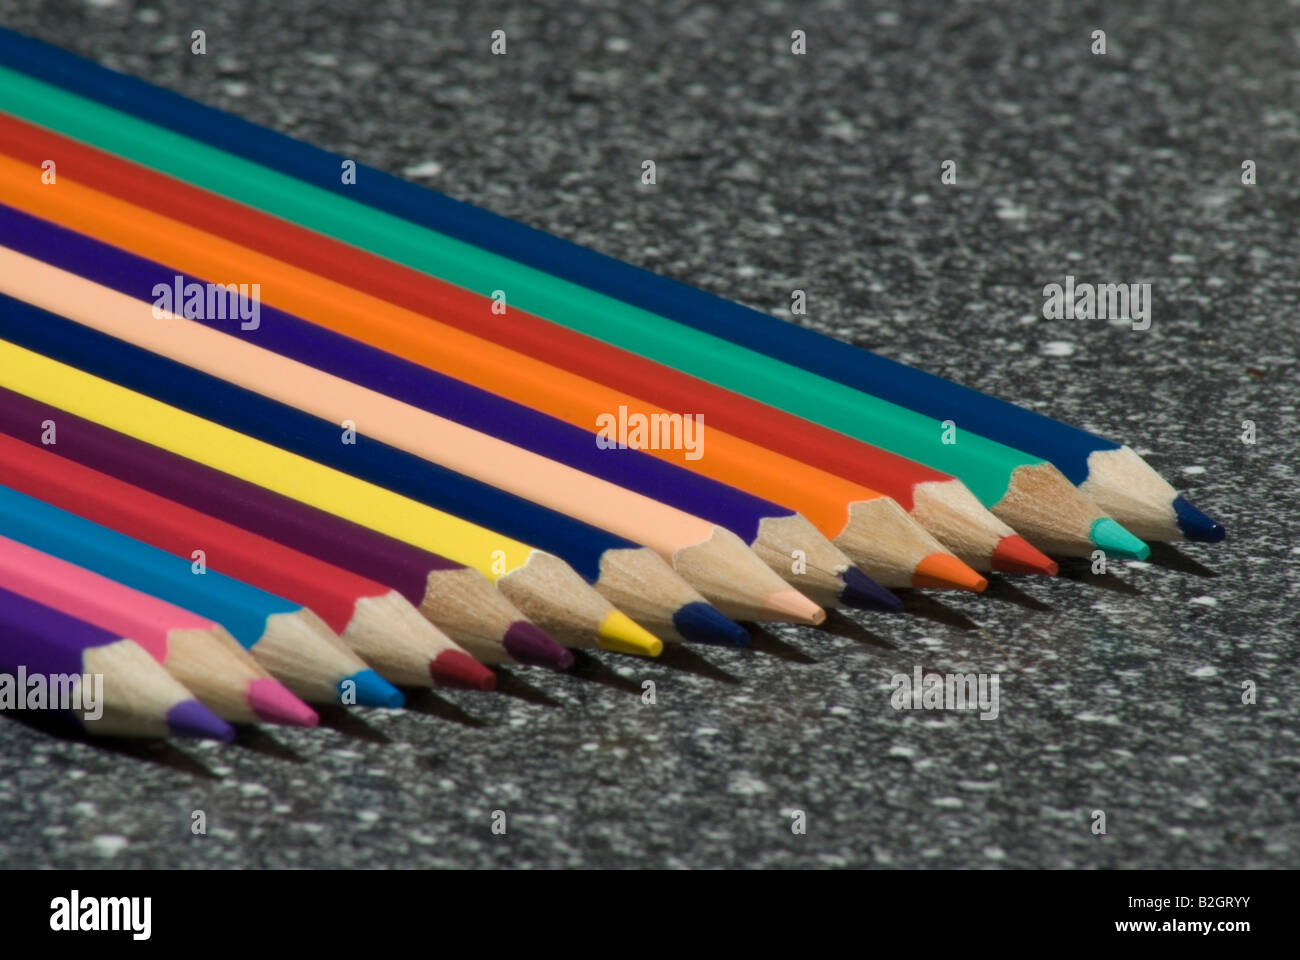 Coloured Pencils Stock Photo